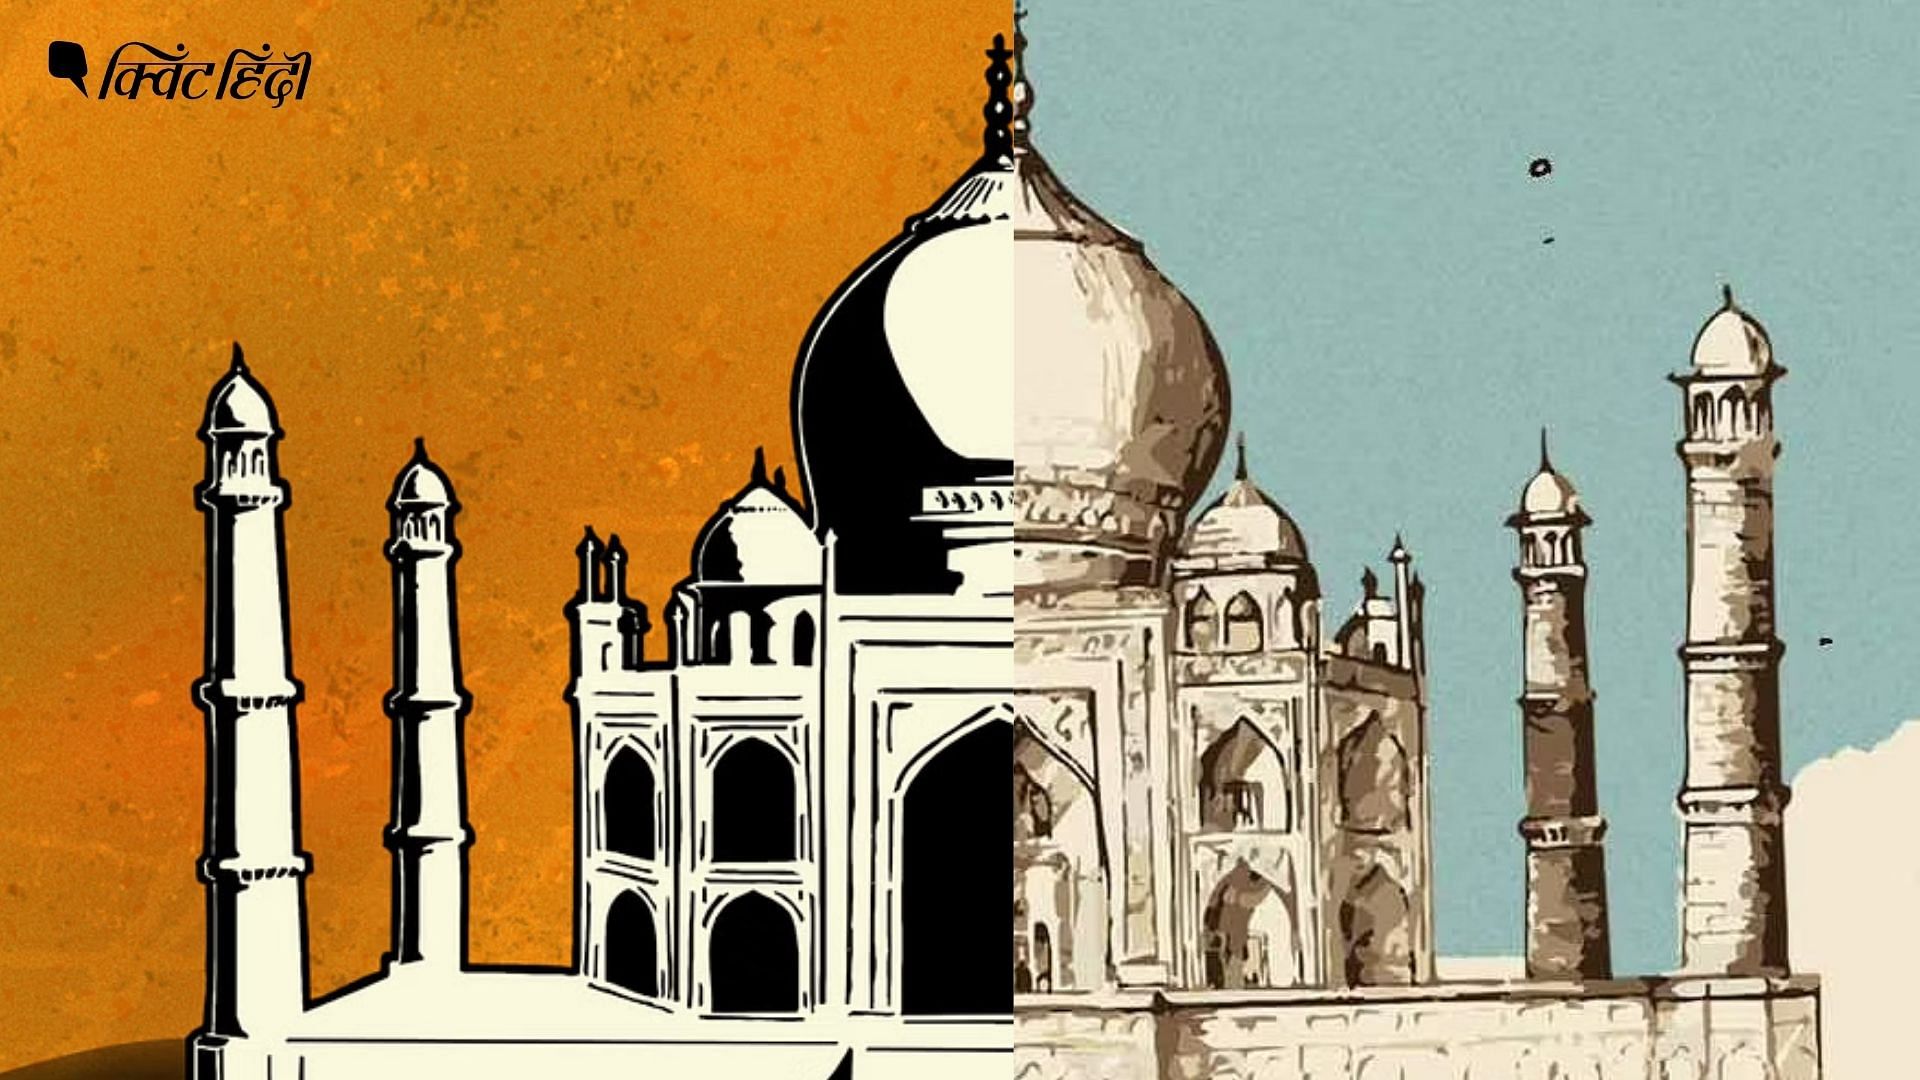 Taj Mahal Images | Free HD Background Photos, PNGs, Vectors & Illustrations  - rawpixel